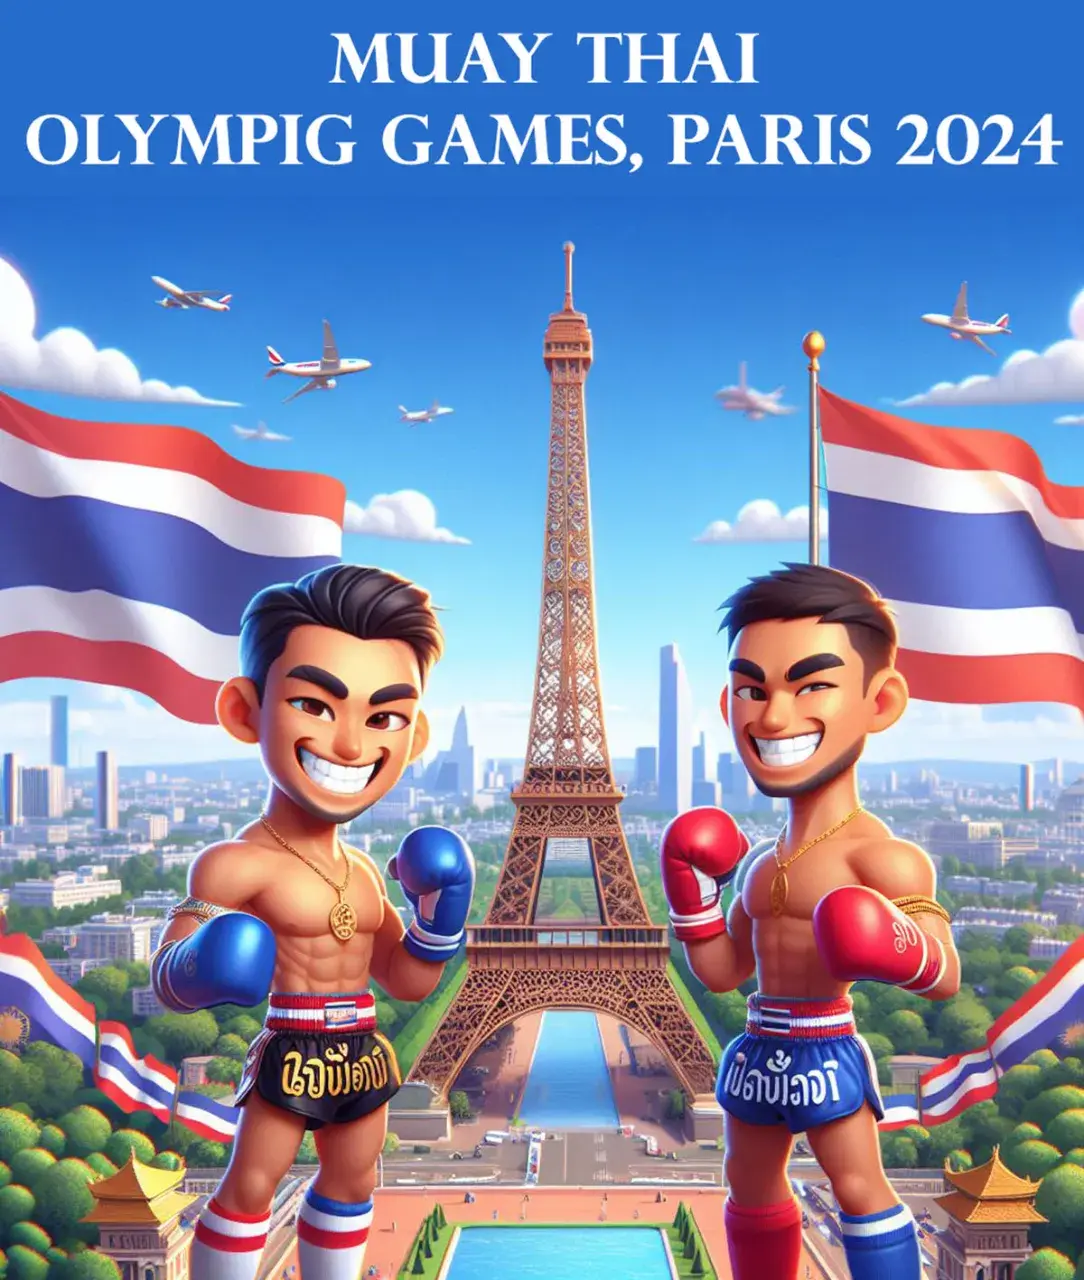 MUAYTHAI IN OLYMPIC GAMES 2024